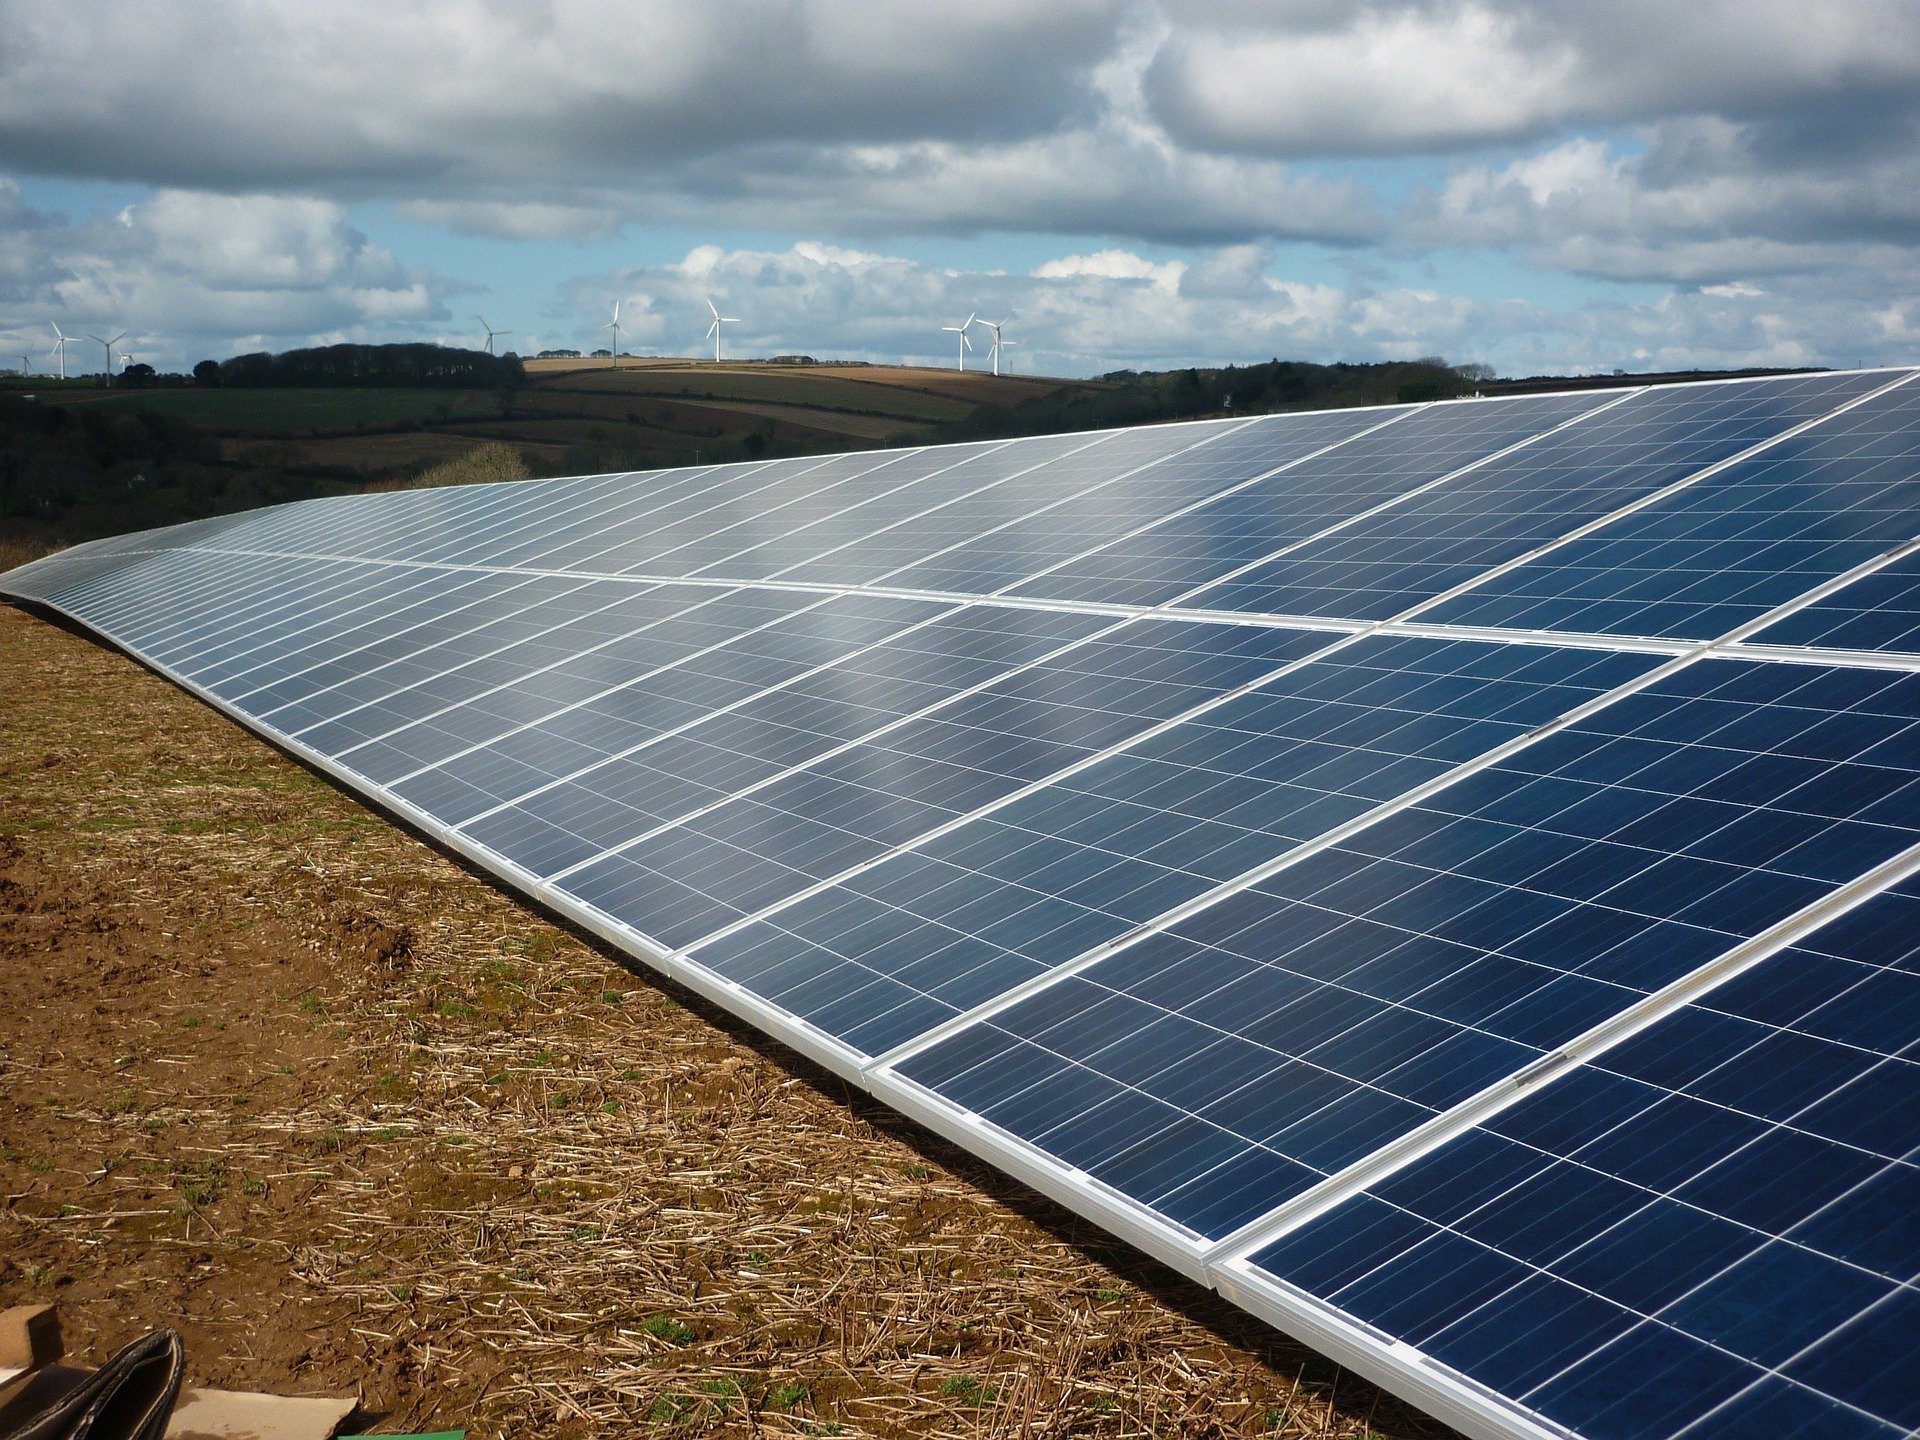 Stock image of a solar farm